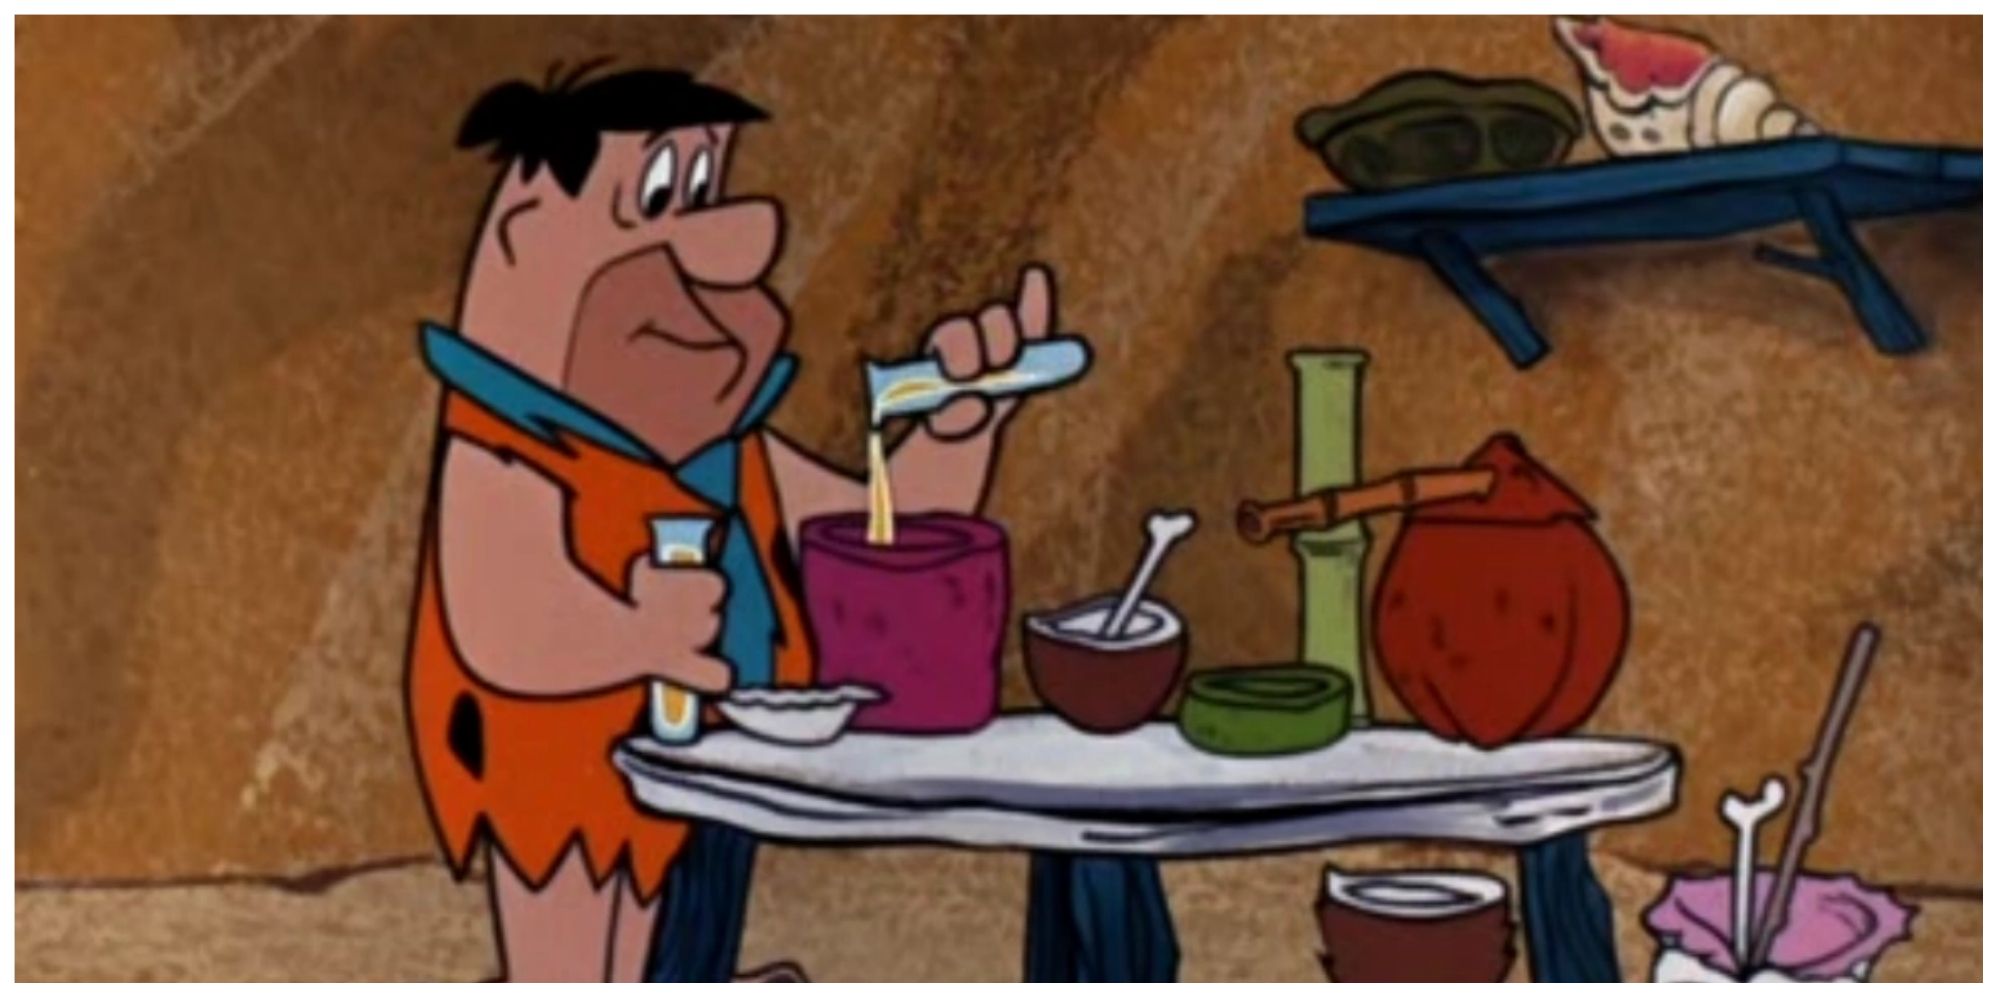 Fred Flinstone in his lab in the Flintstones